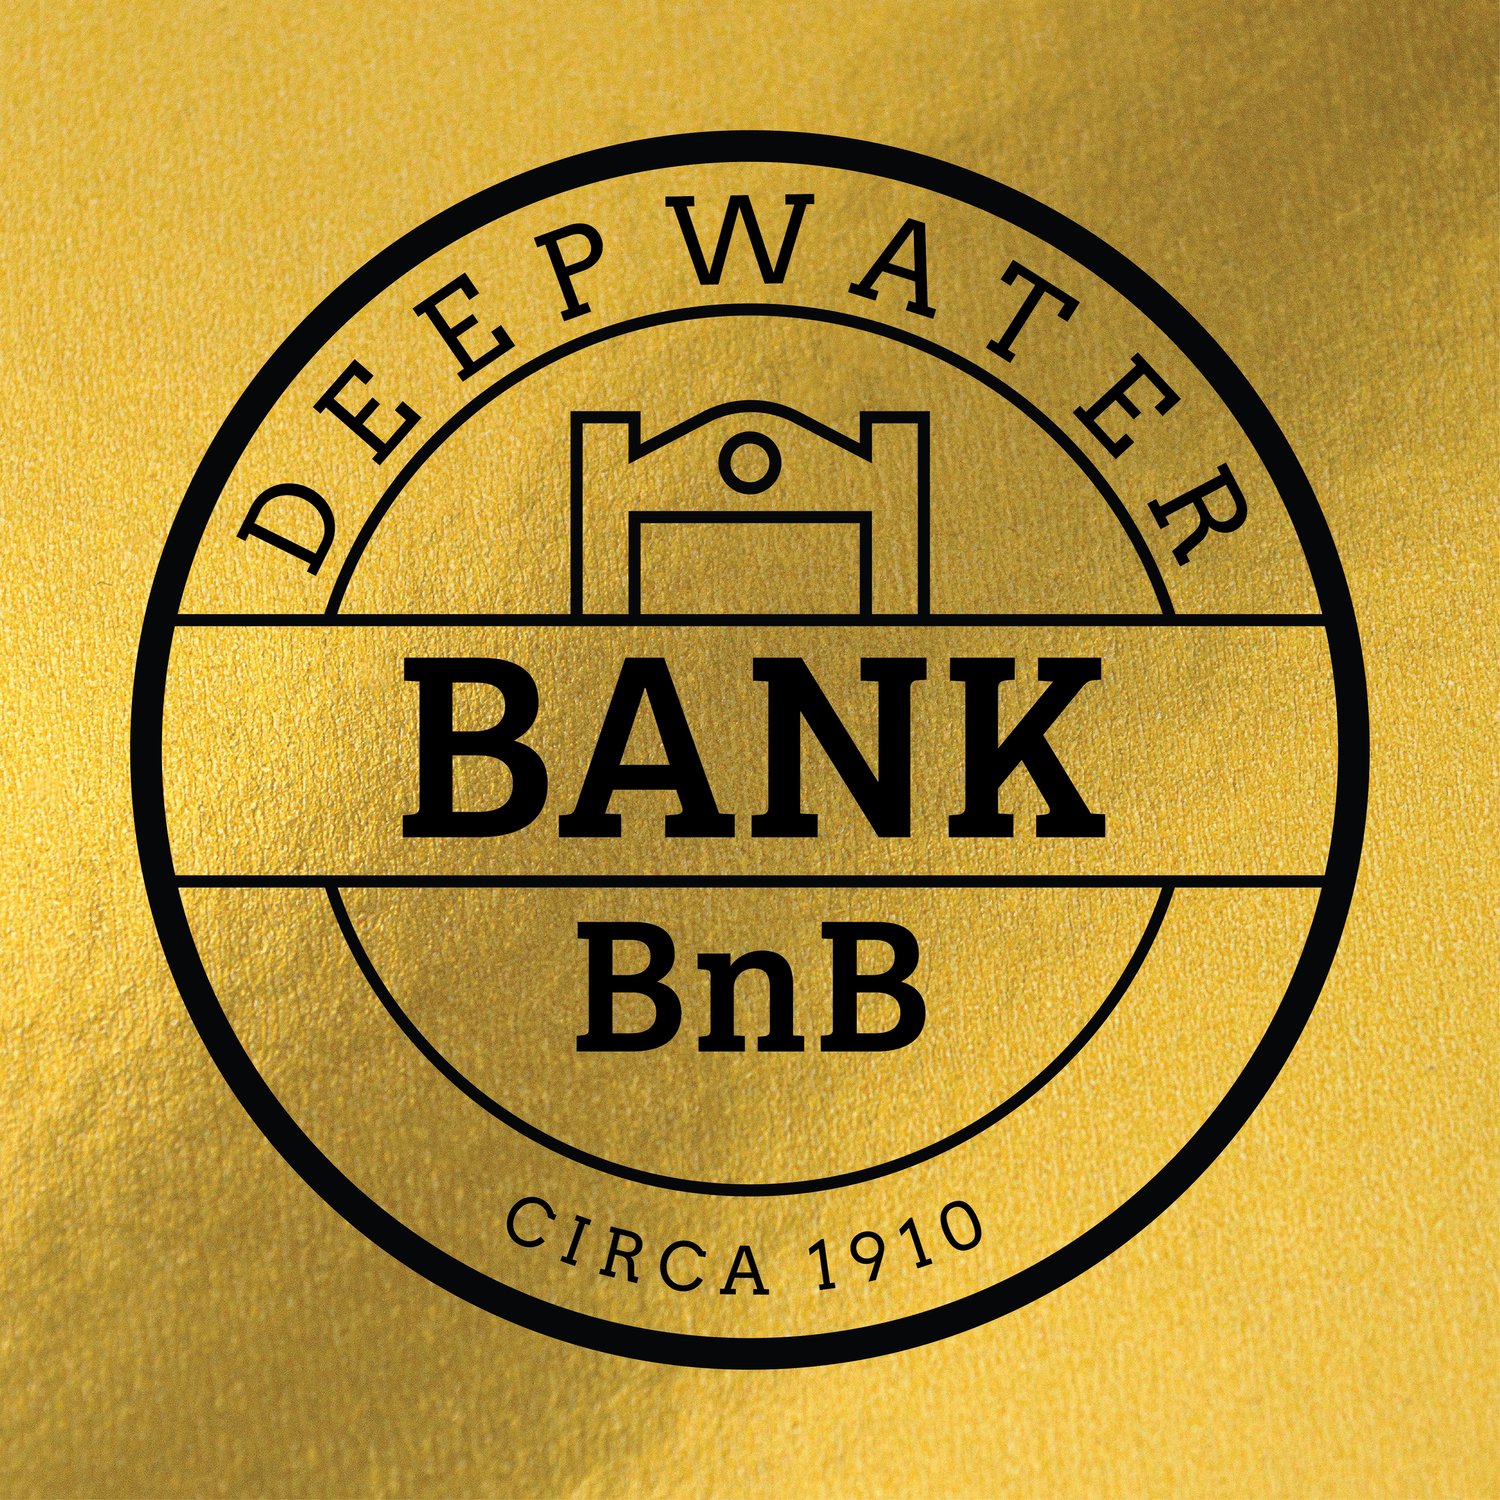 Deepwater Bank BnB